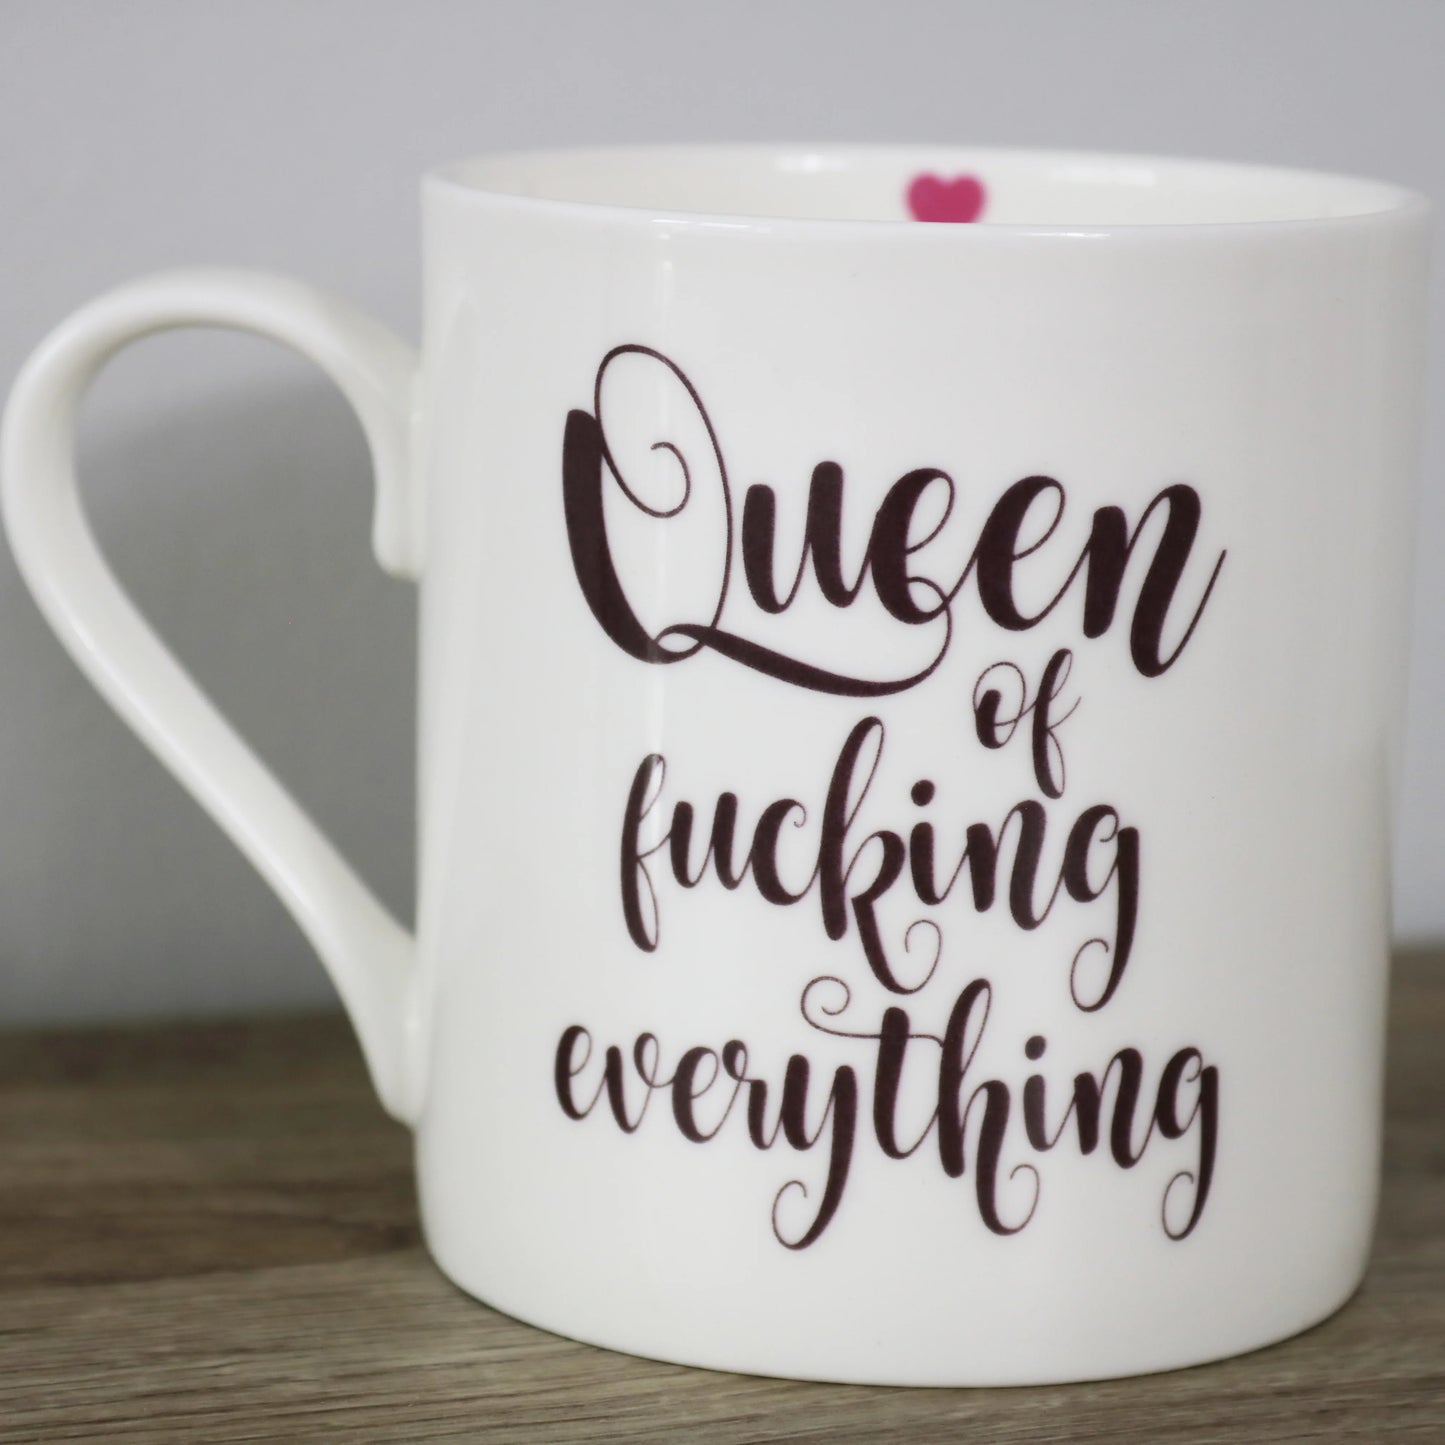 Queen of Fucking Everything Mug - NO GIFT BOX